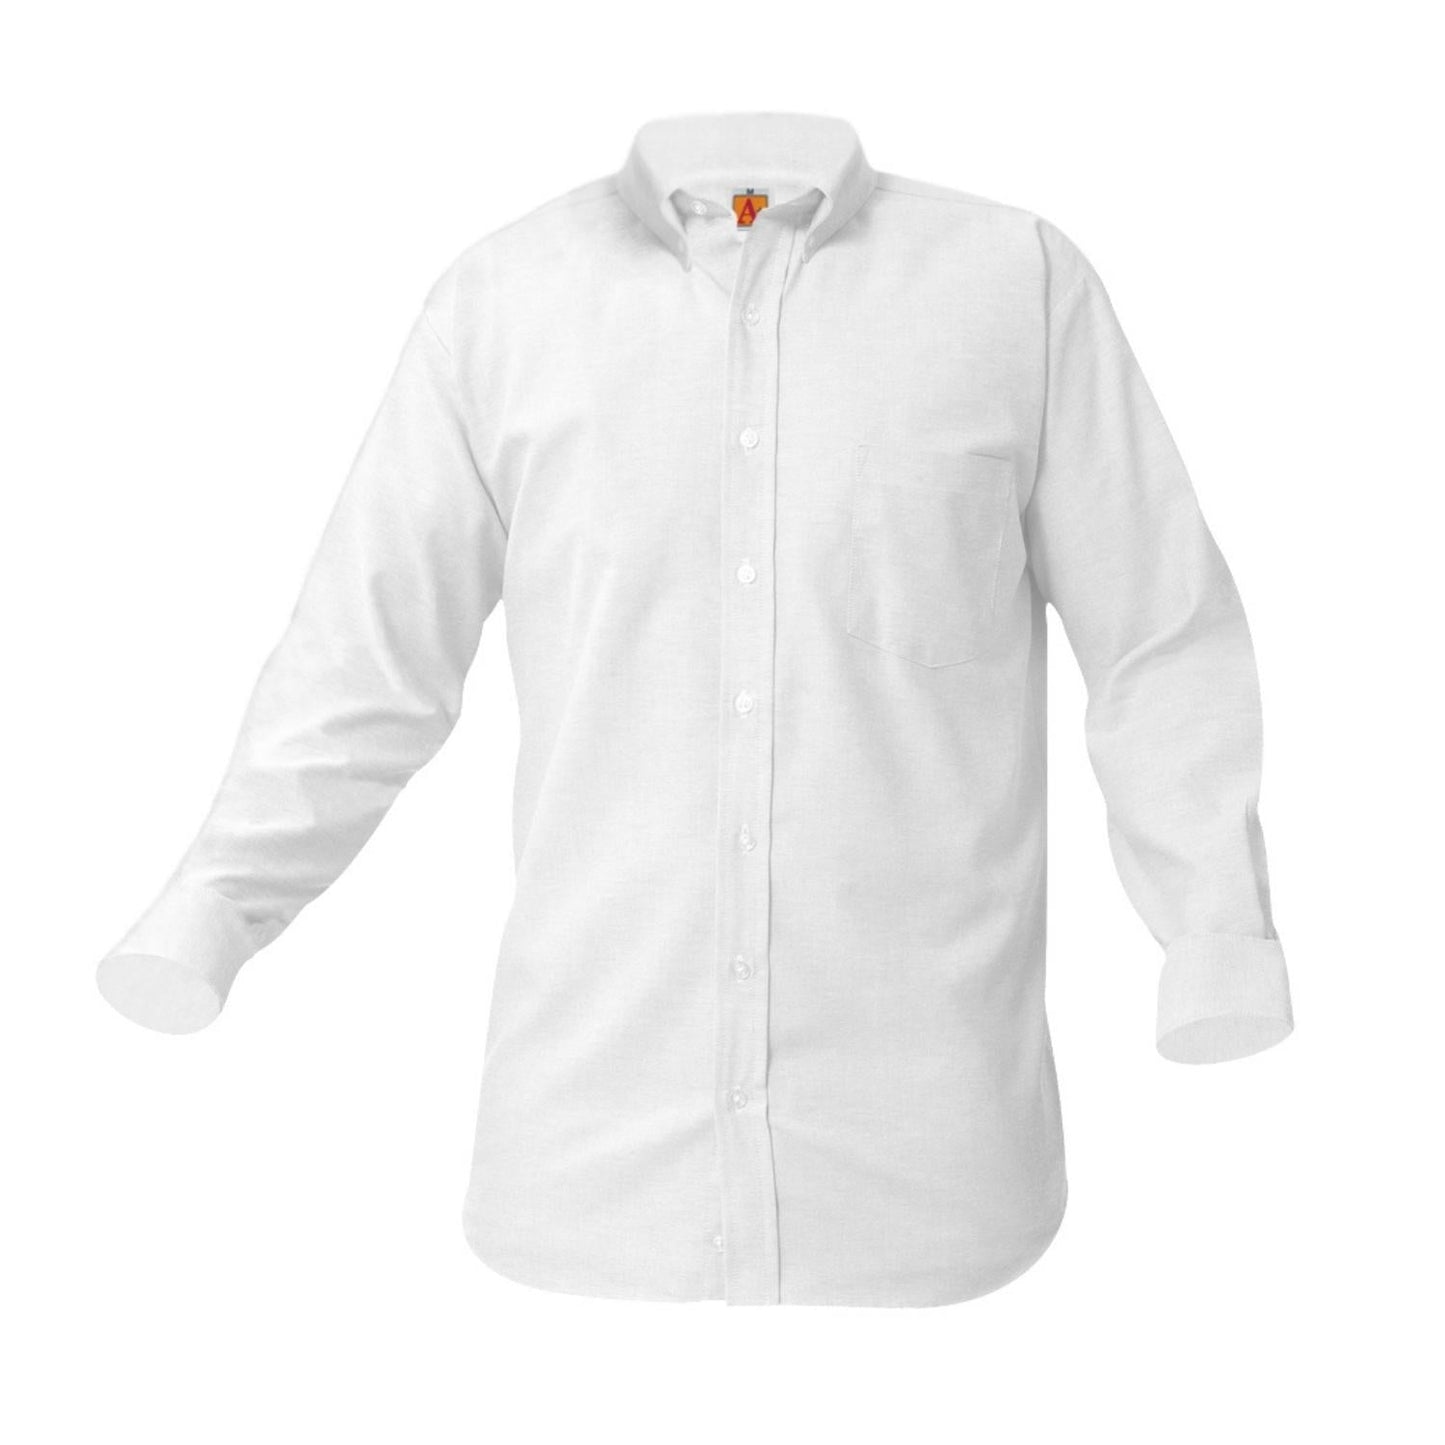 Oxford Long Sleeve Shirt (Male) w/Logo - 1103